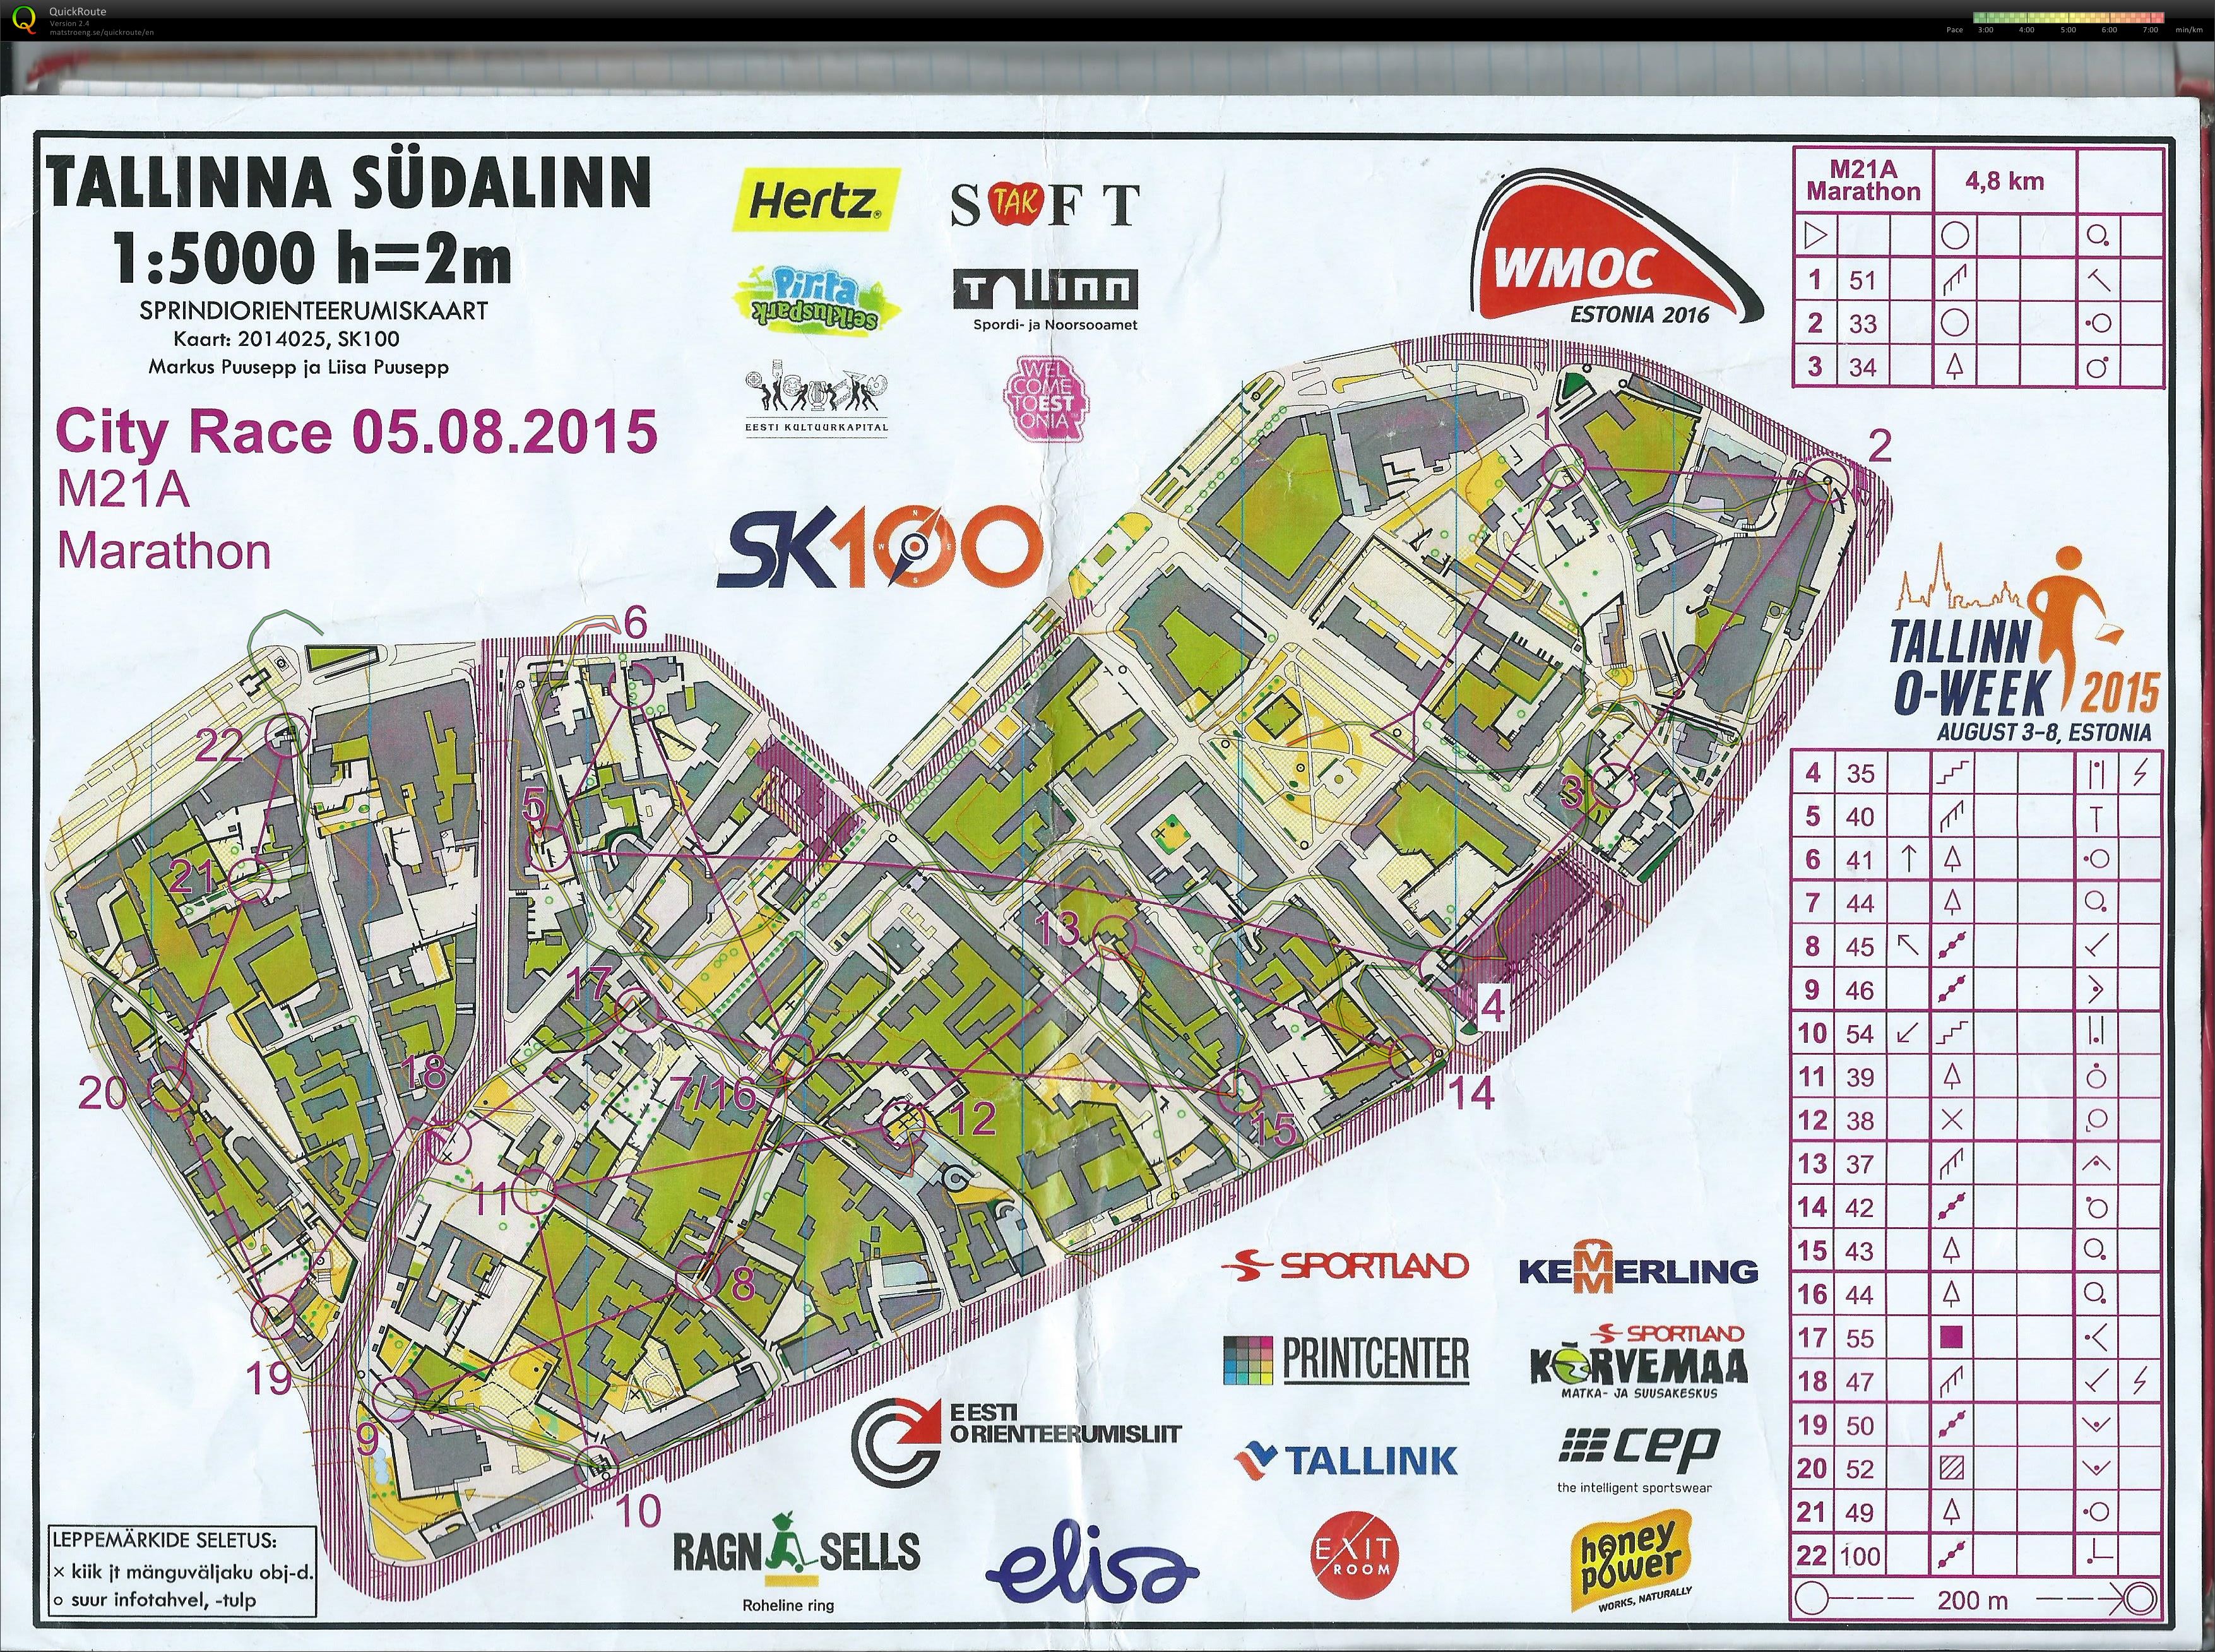 Z378 - Tallinn O-Week - E3 - City Race (2015-08-05)